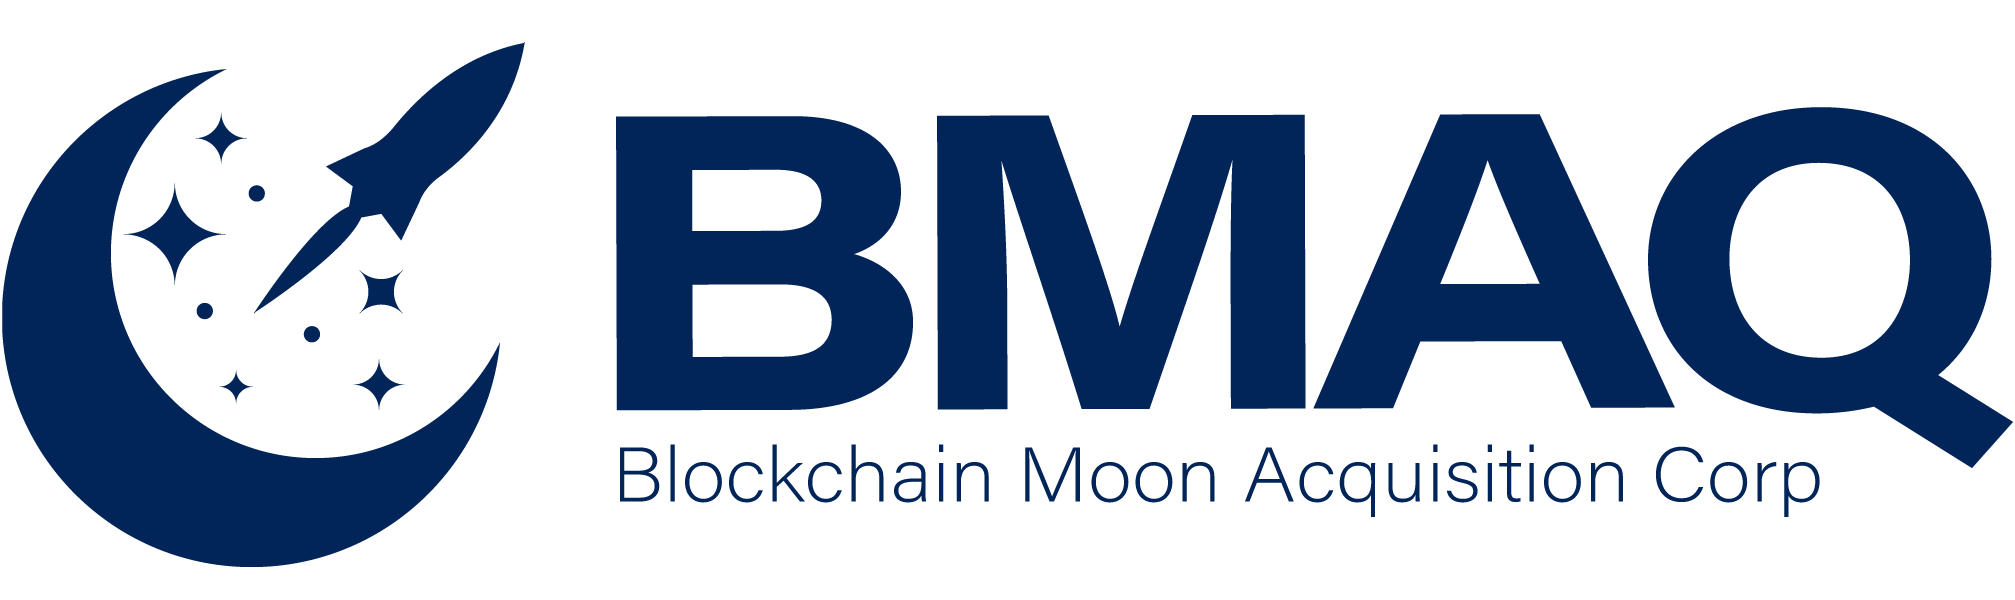 Blockchain Moon Acquisition Corp.  Announces Closing of $100 Million Initial Public Offering 